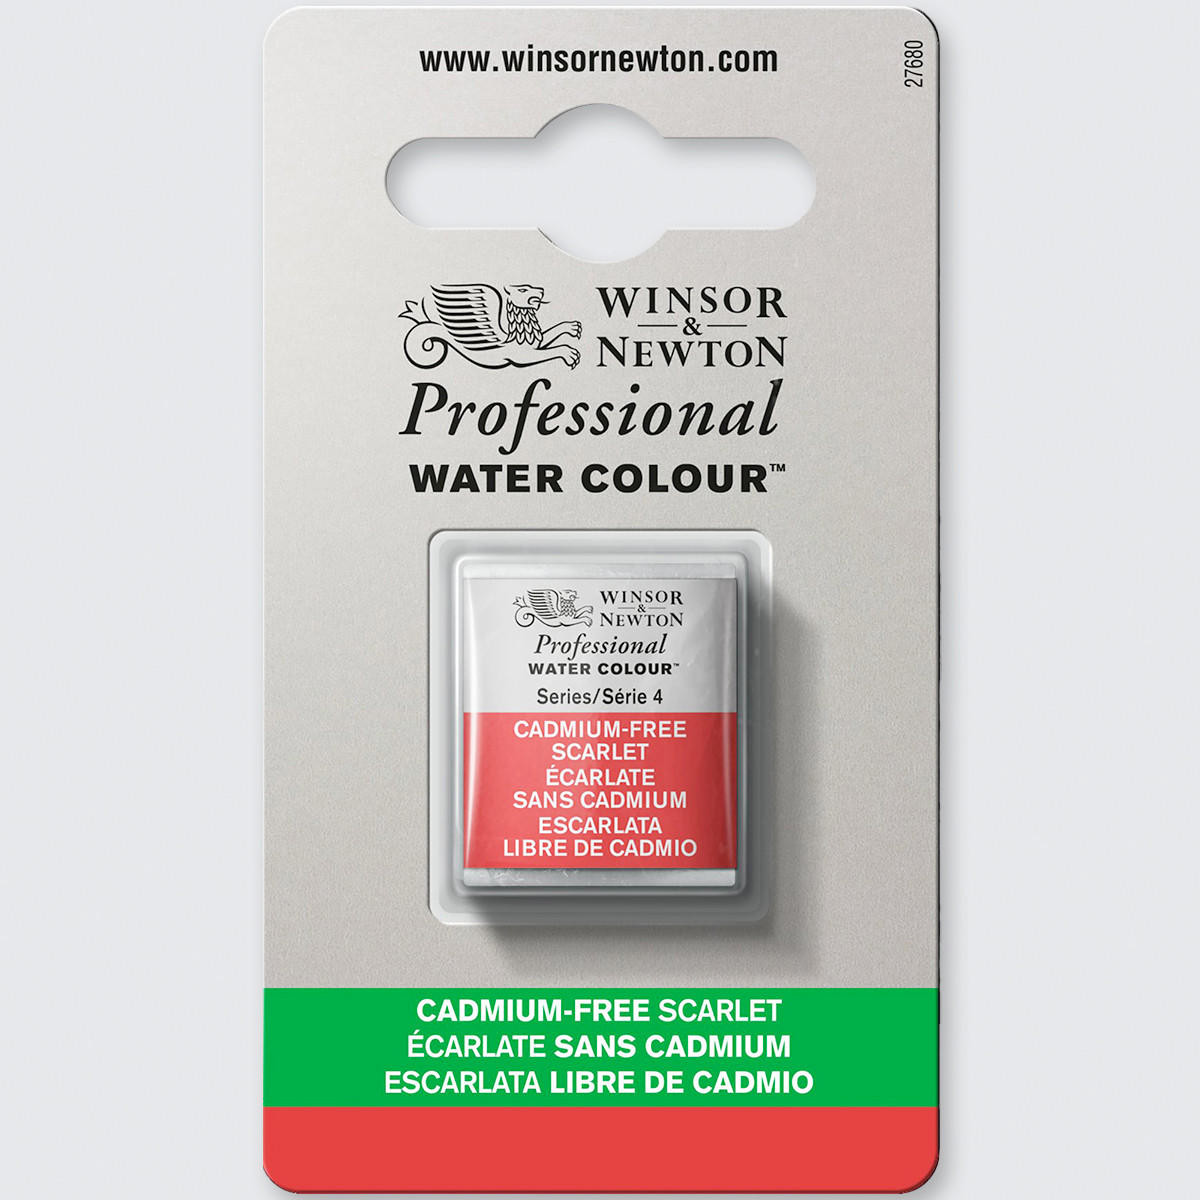 Winsor & Newton Professional Water Colour Half Pan Cadmium-Free Scarlet